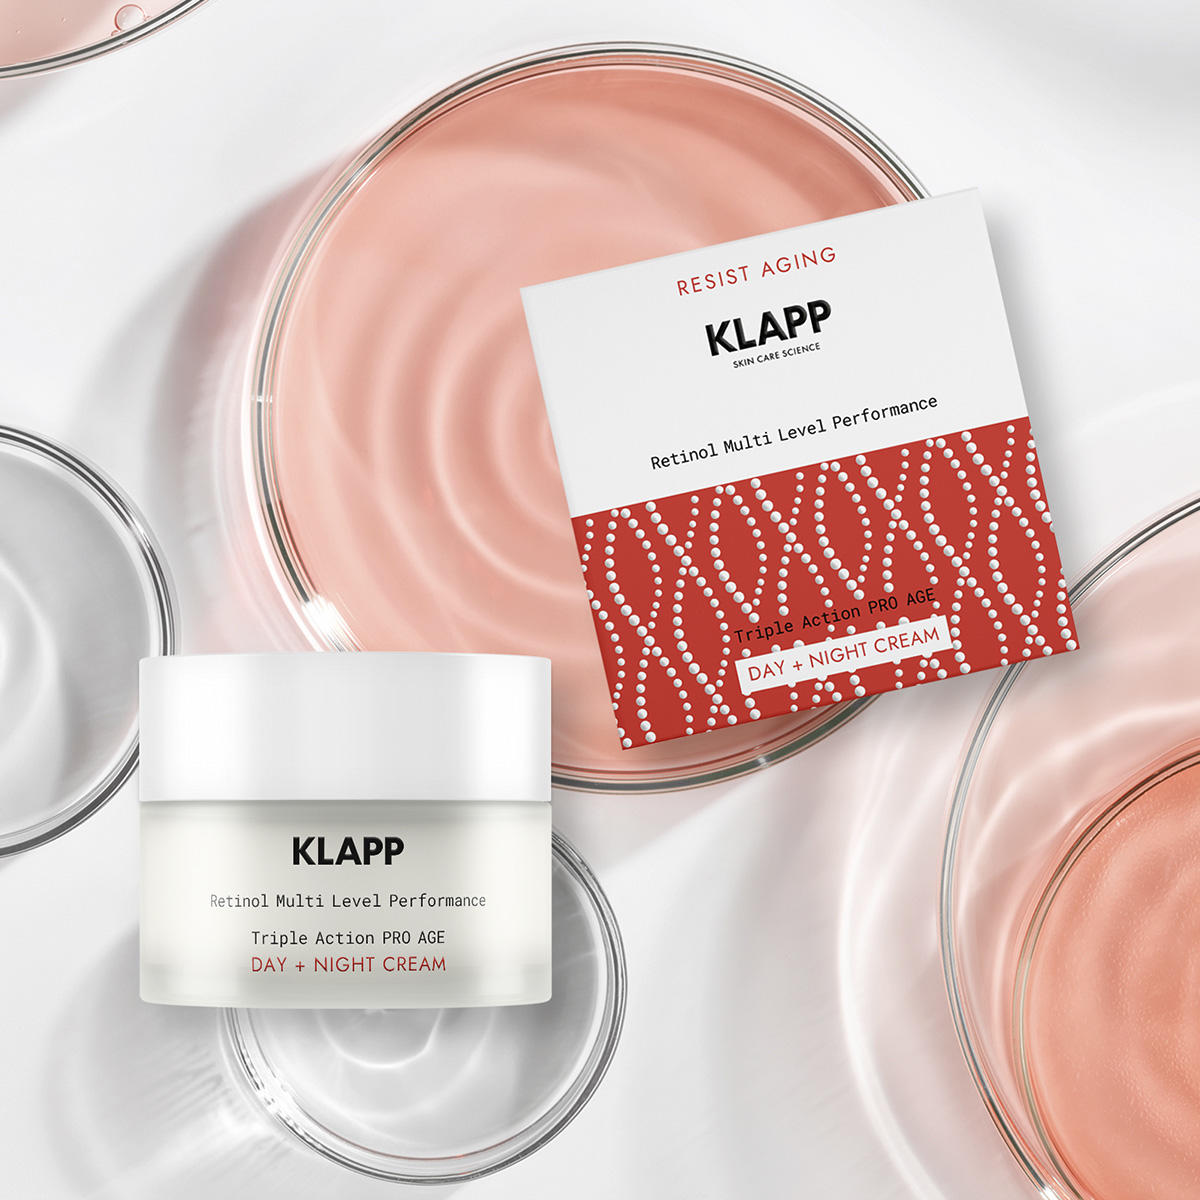 KLAPP RESIST AGING Retinol Triple Action PRO AGE Day + Night Cream 50 ml - 3